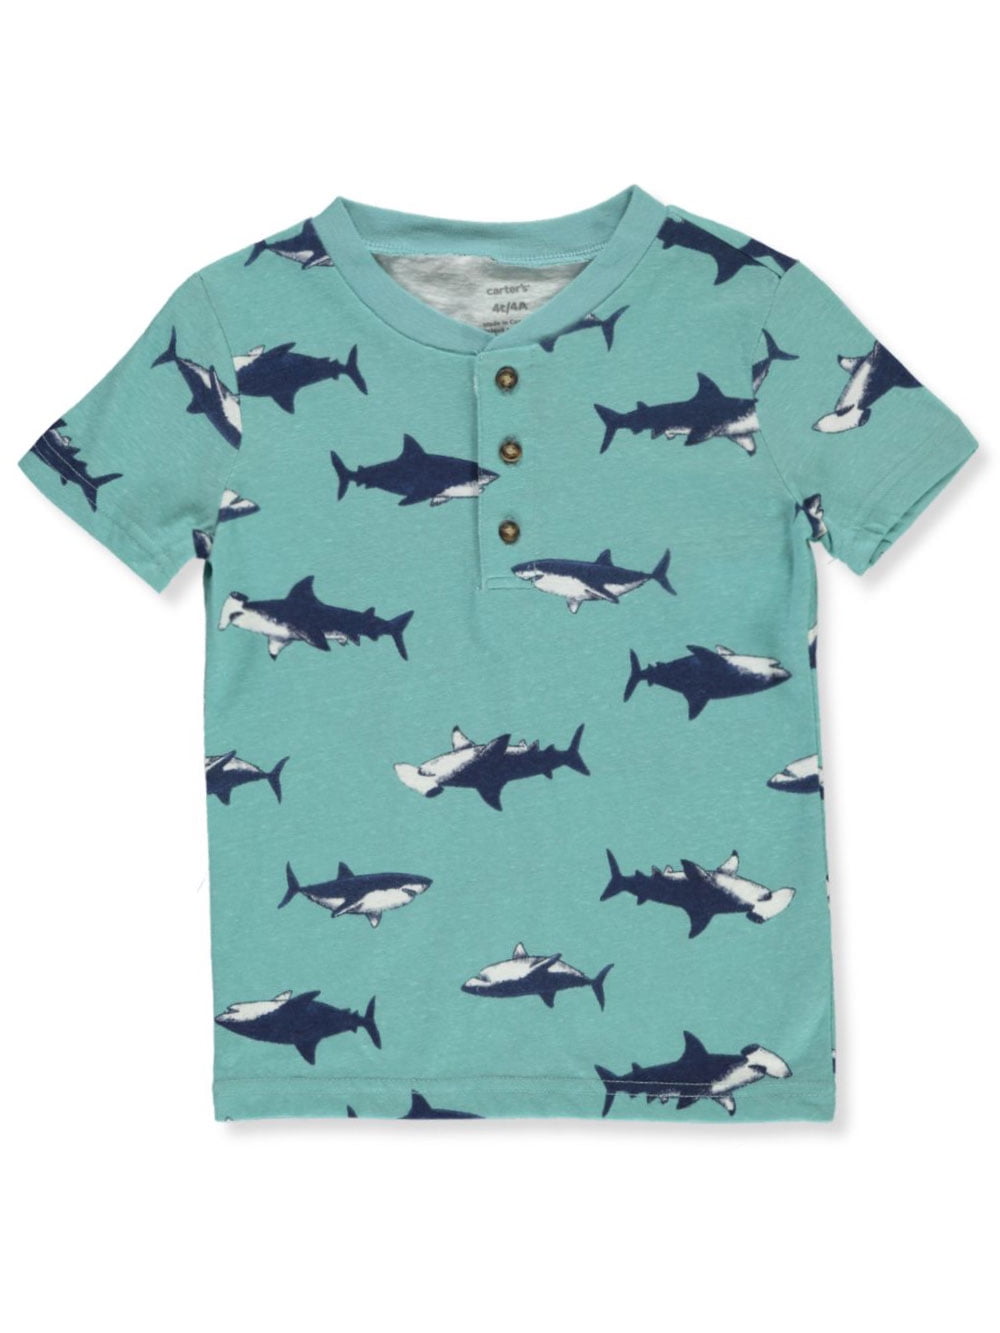 New Carter's Pizza Shark Boys Shirt Tank Top Navy Turquoise 4T 5T 